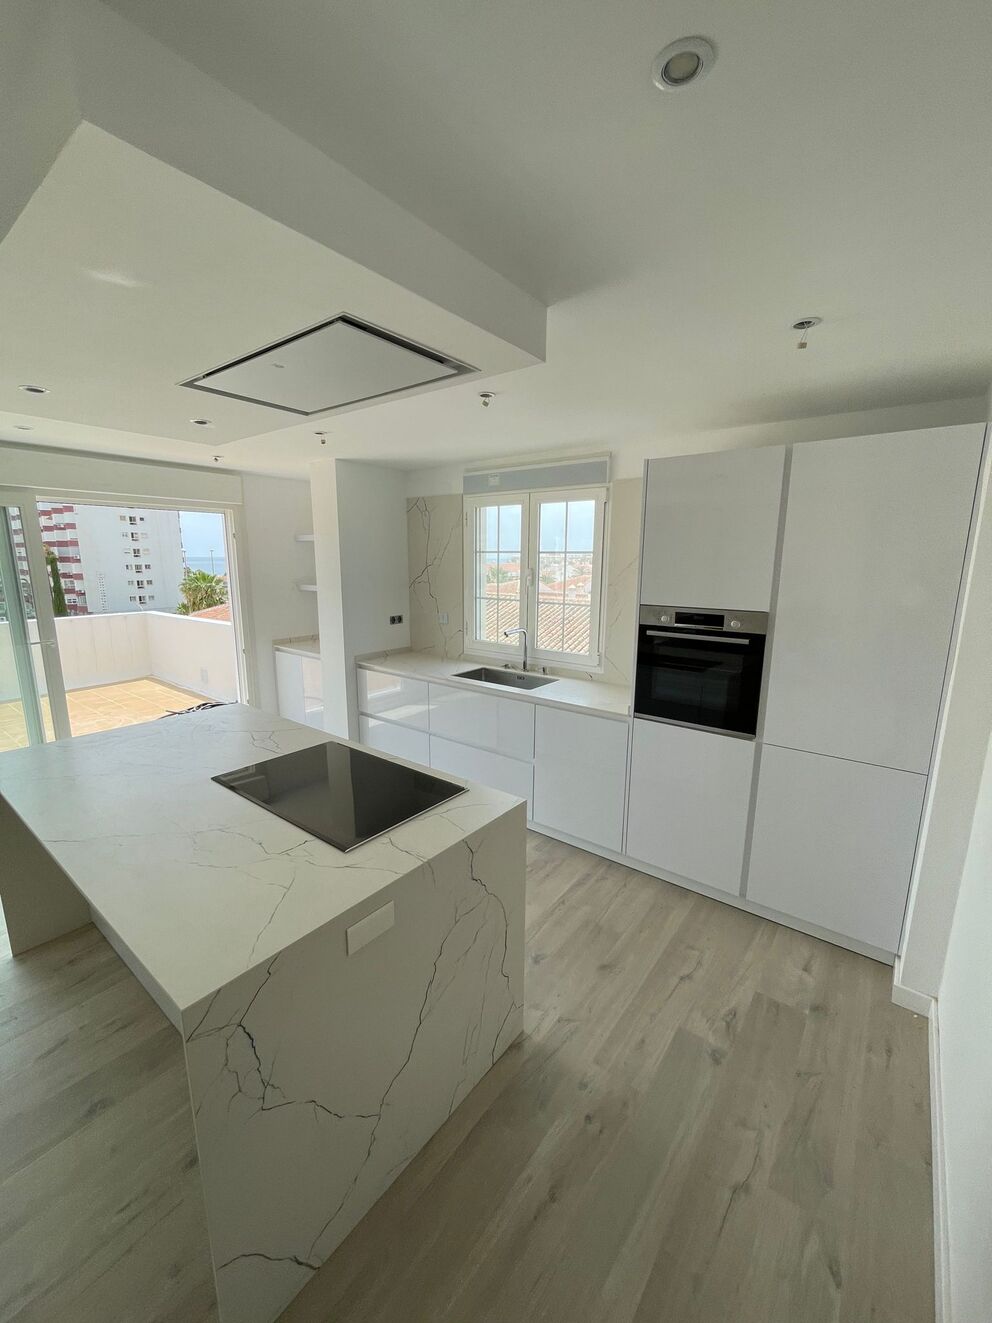 Glossy white kitchen with island